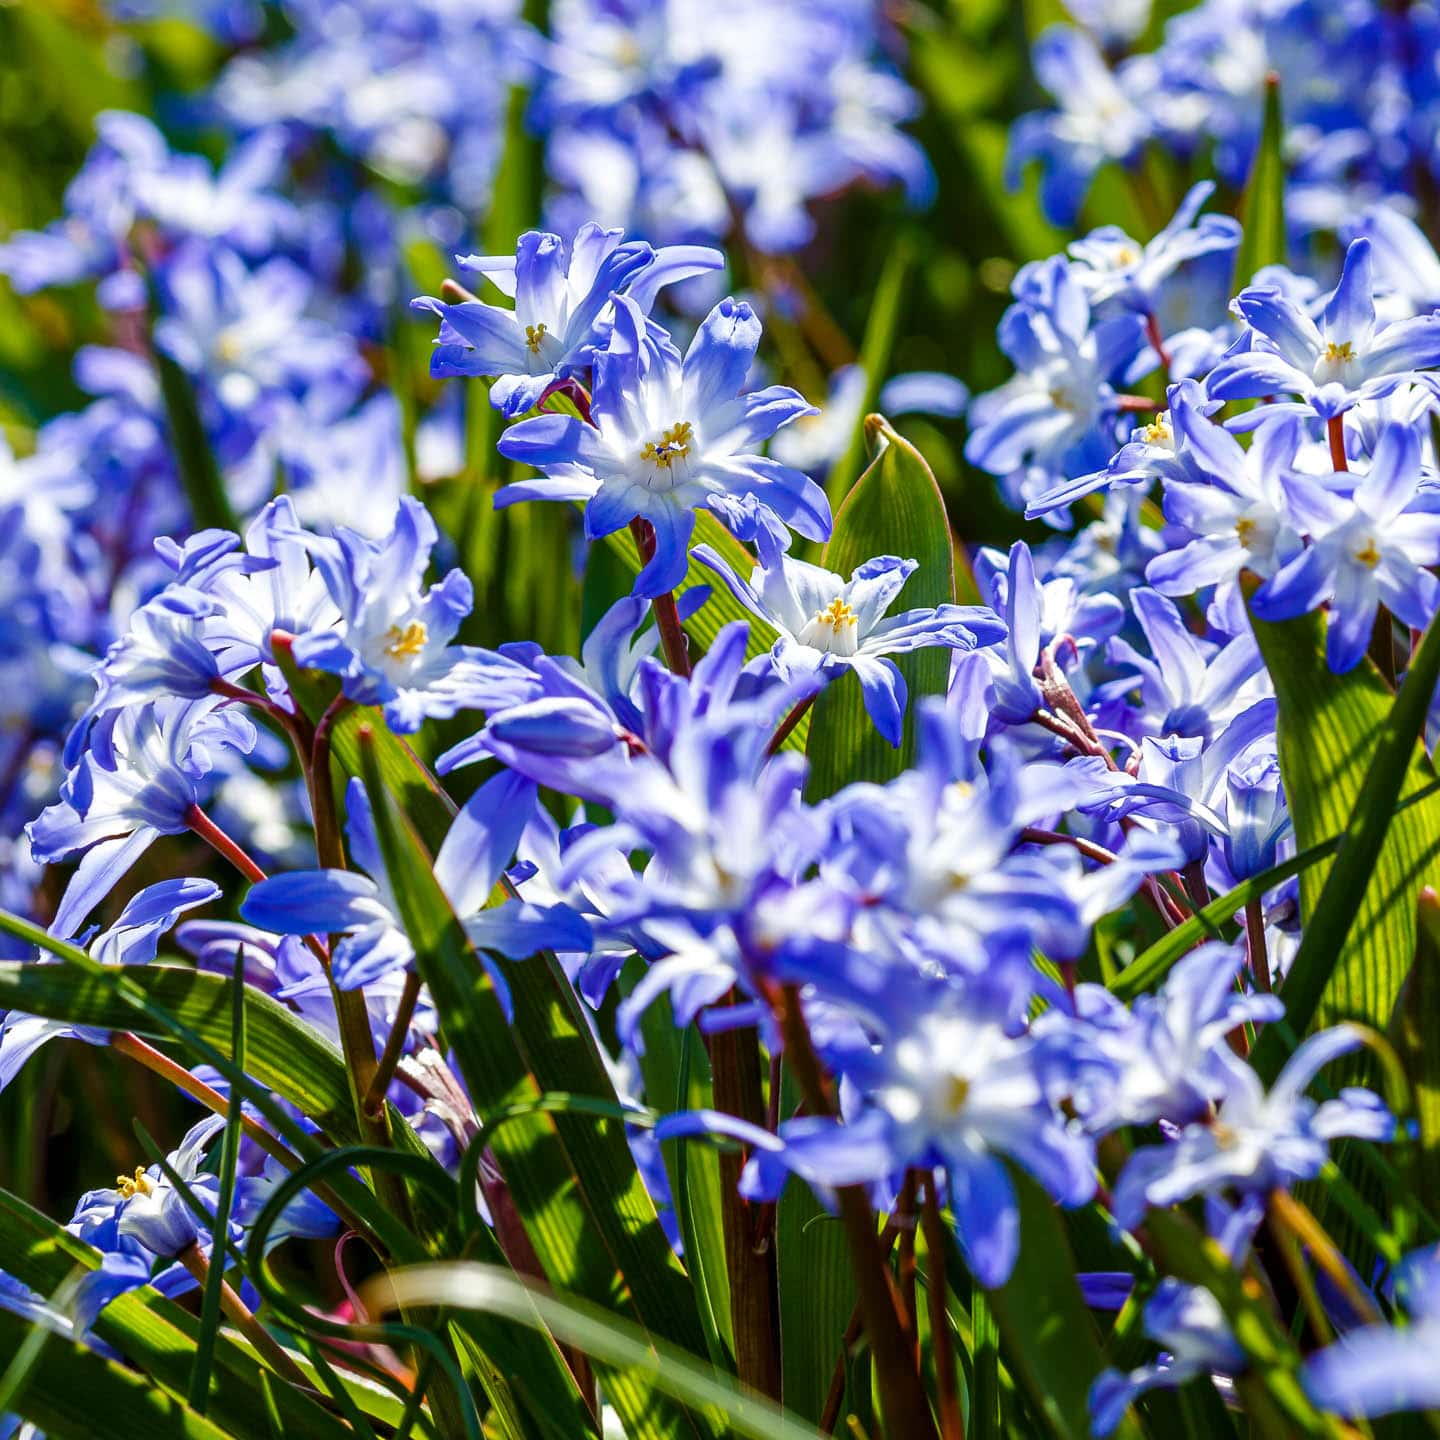 blue glory of the snow (Chionodoxa) flowers